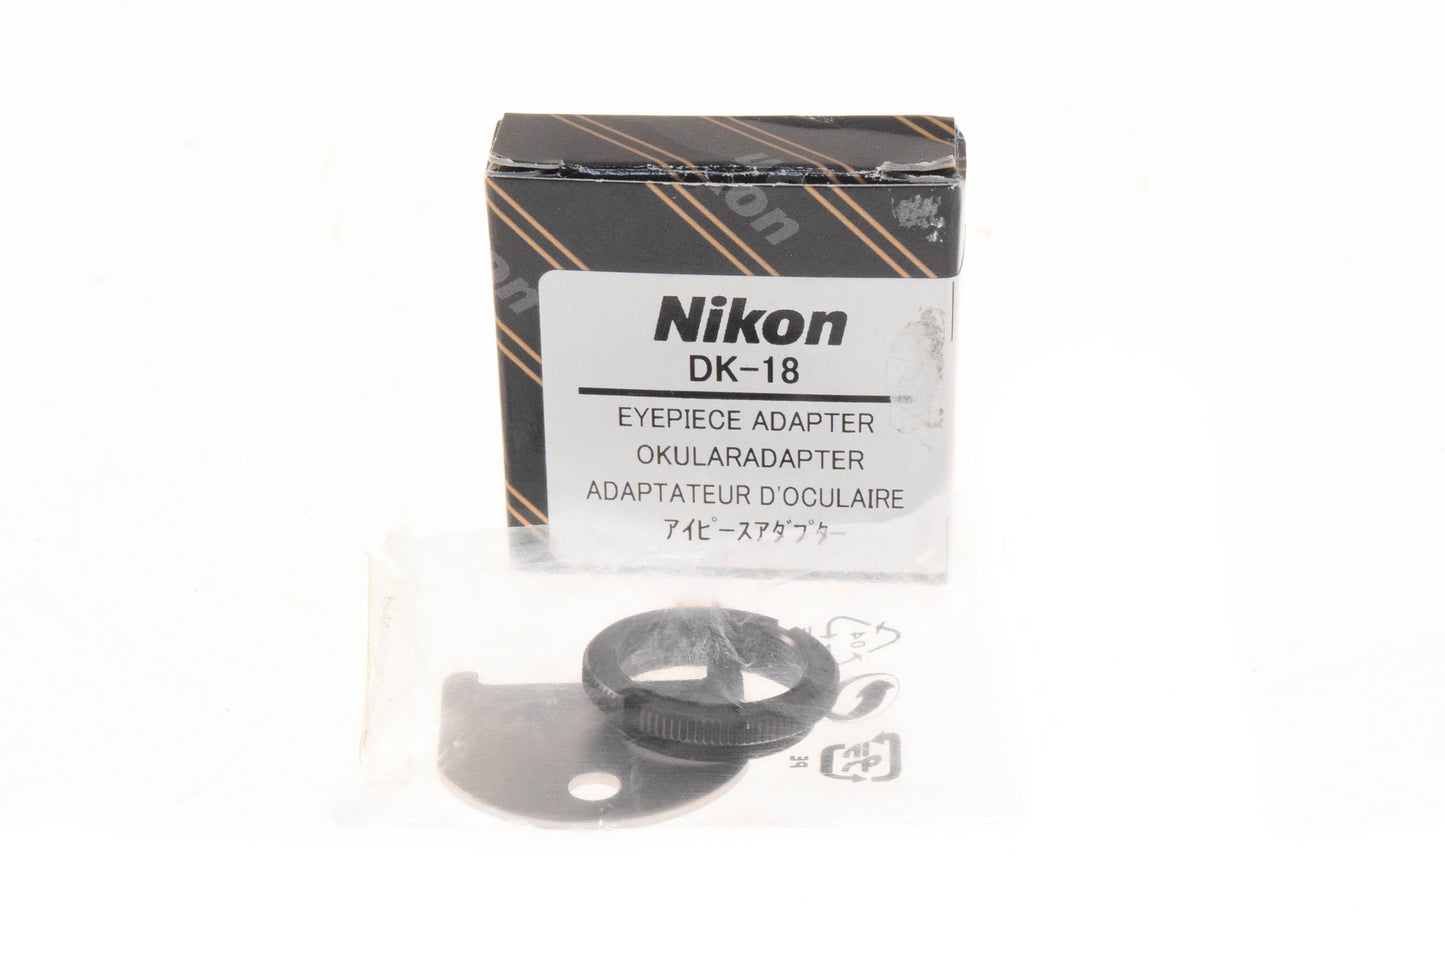 Nikon DK-18 Eyepiece Adapter - Accessory